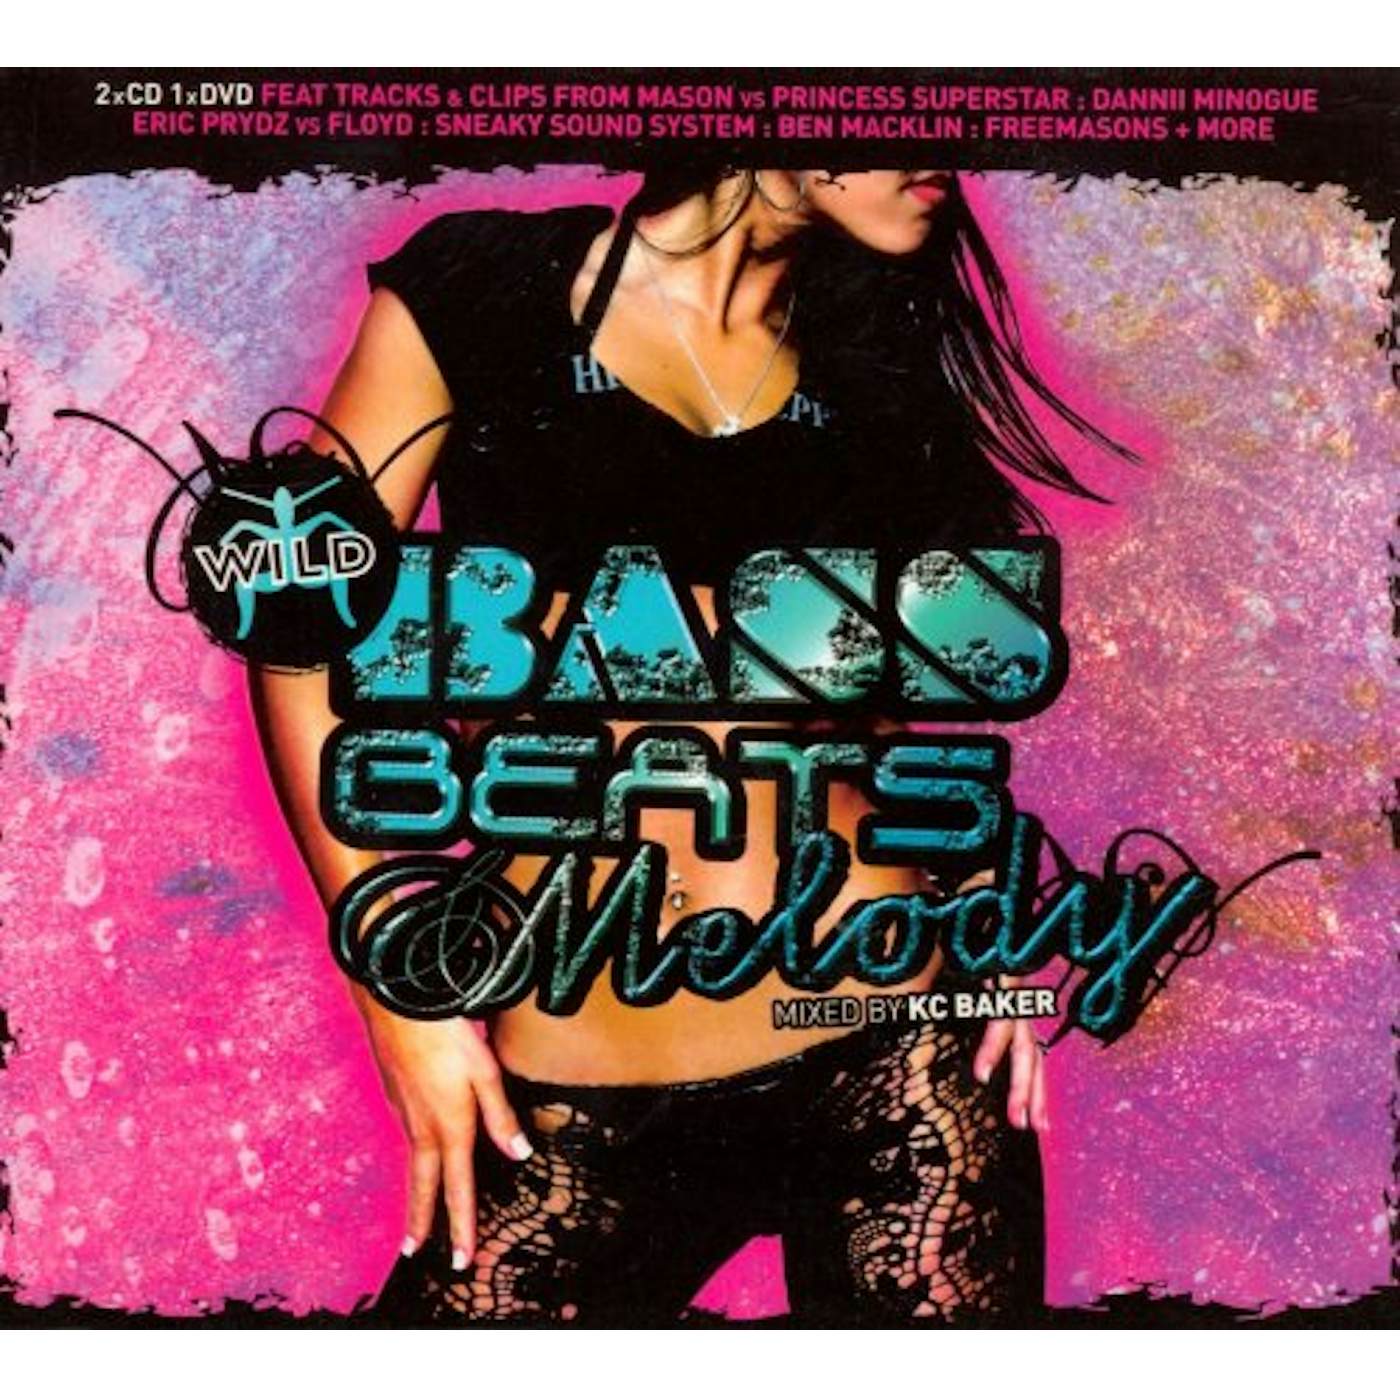 The Wild BASS BEATS & MELODY CD